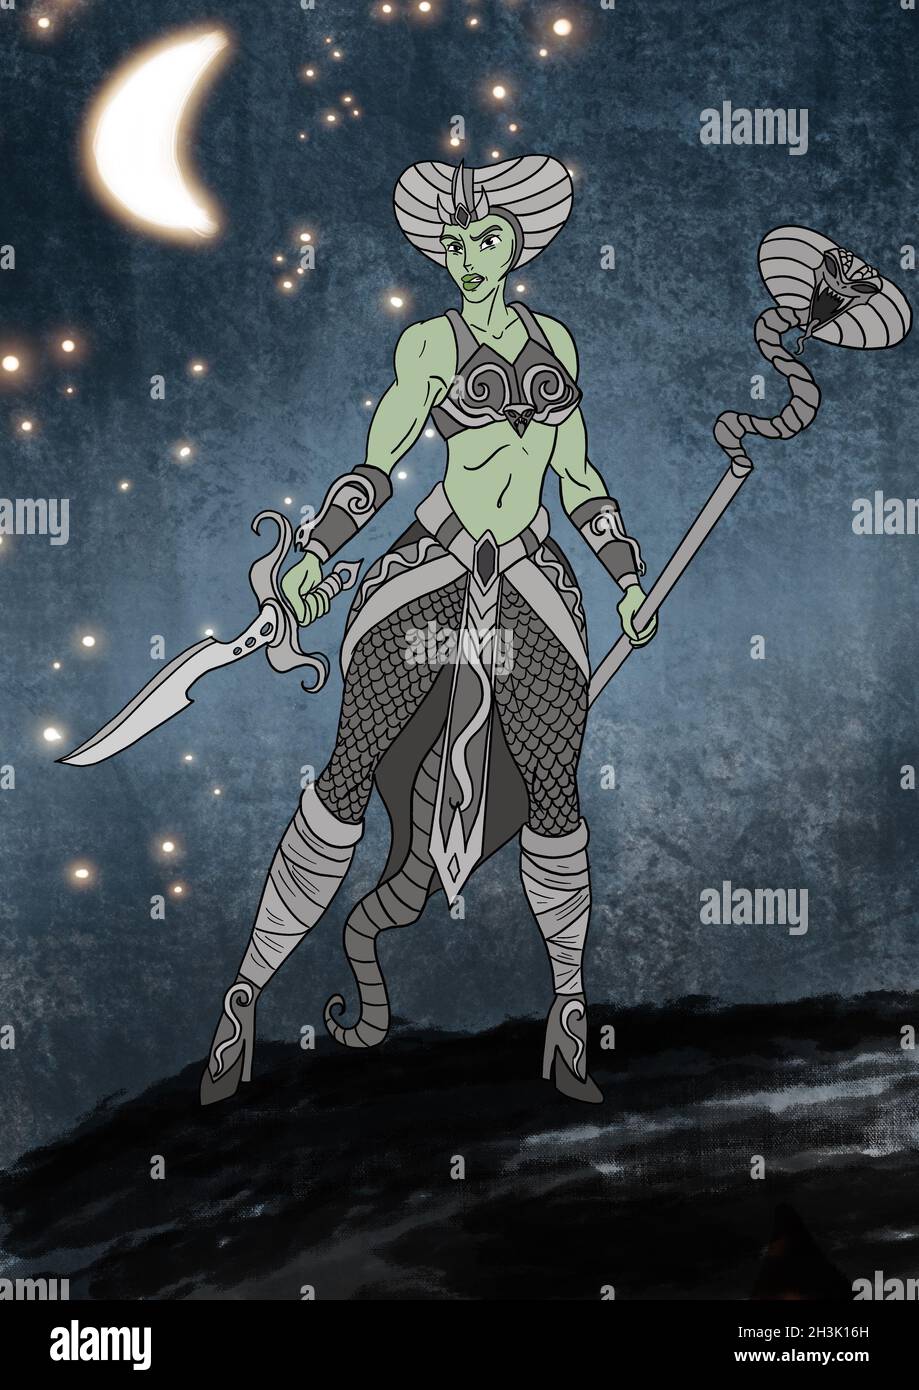 Snake priestess fantasy character illustration art Stock Photo